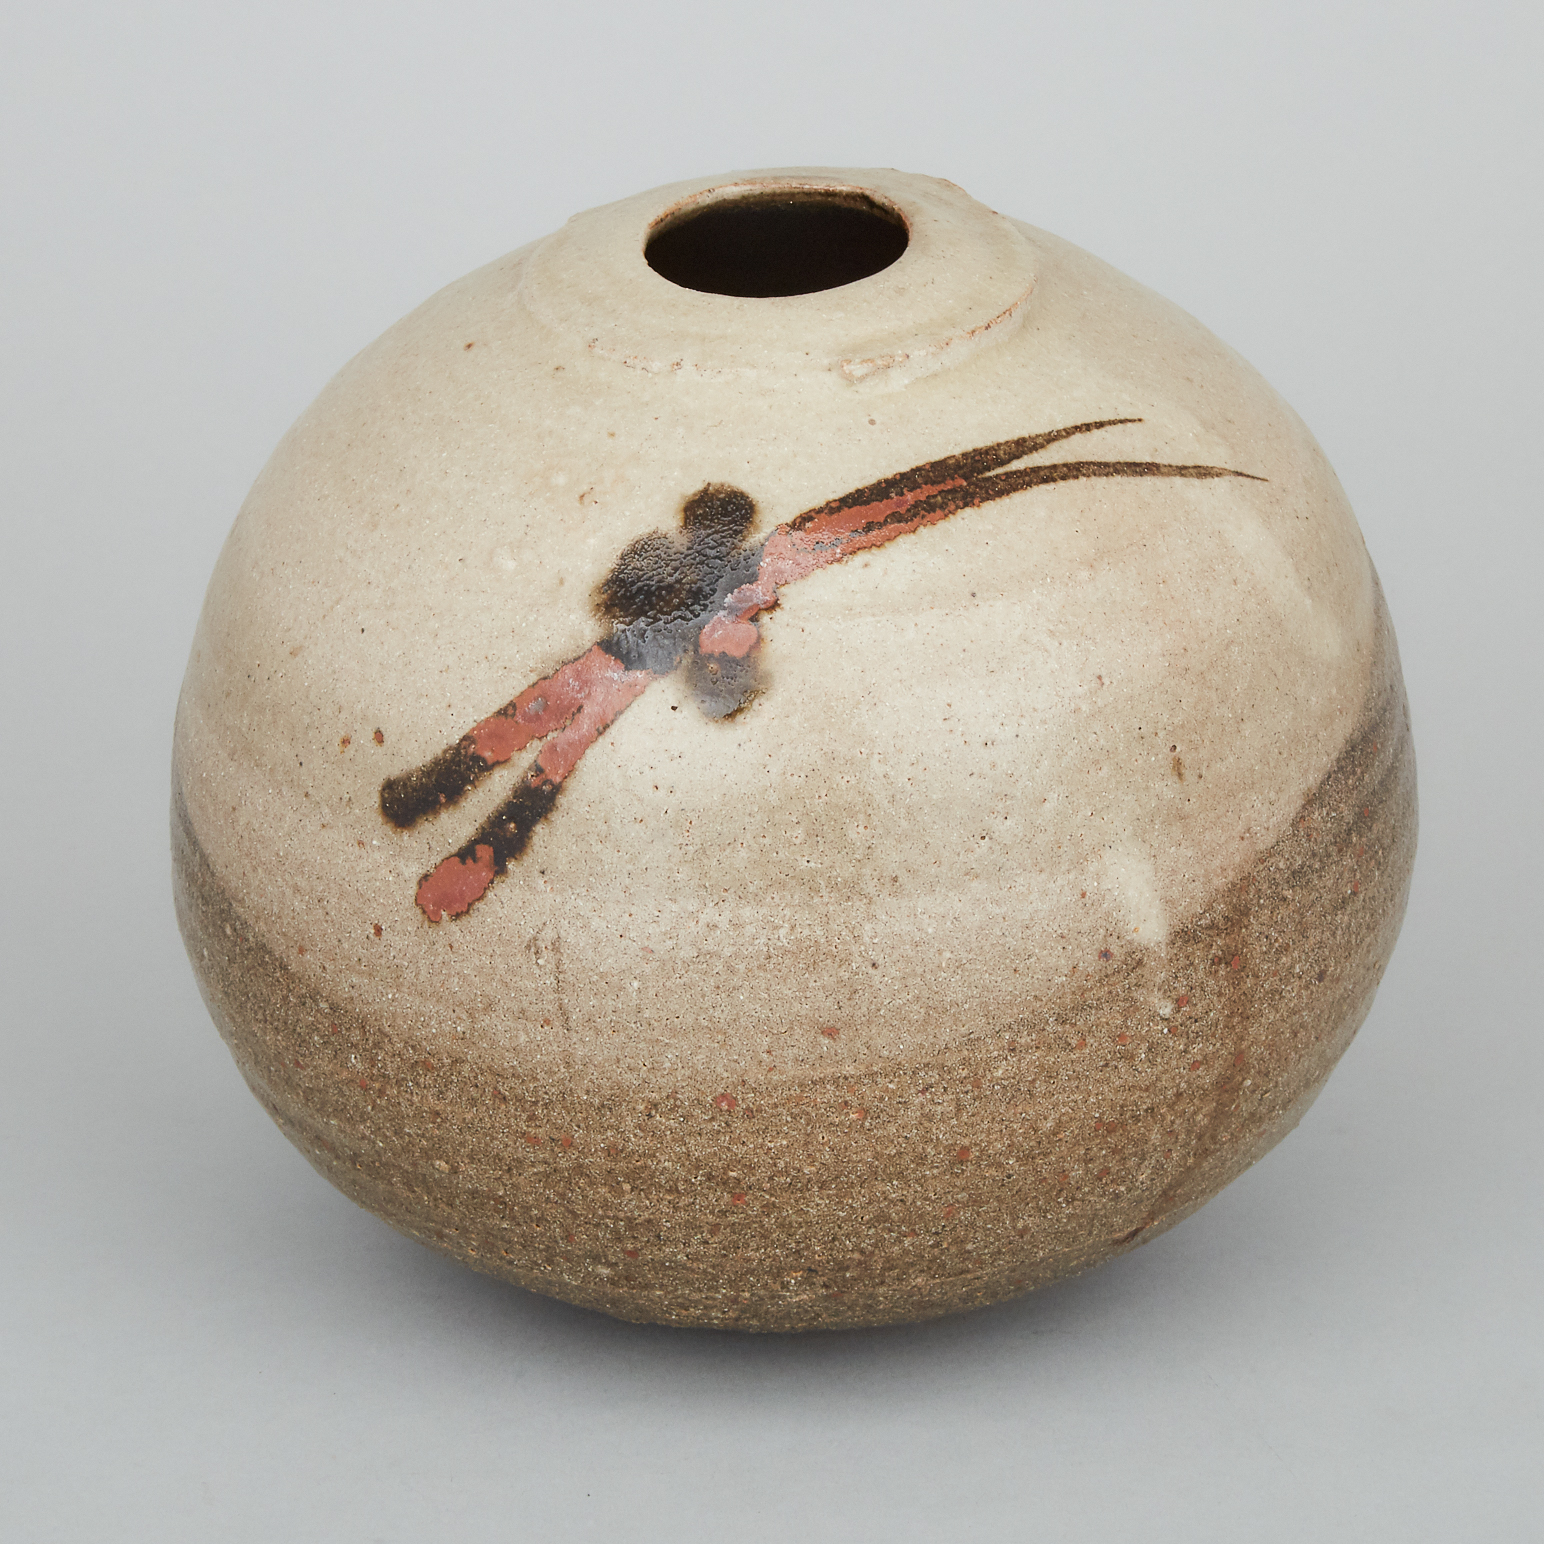 A Mingei Spherical Pottery Vase, Circa 1960